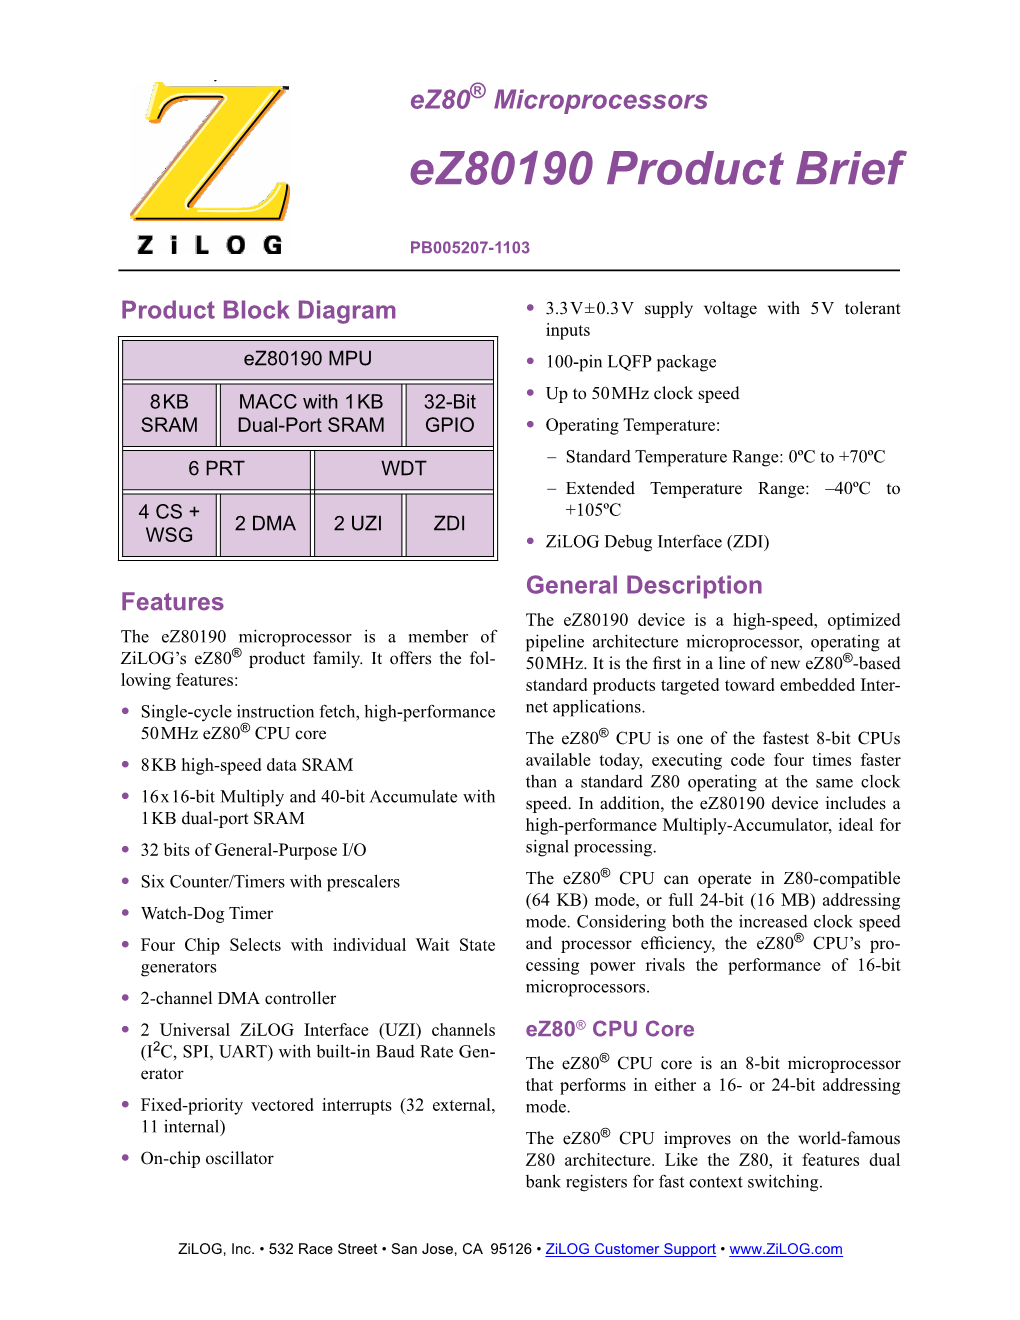 Microprocessors Ez80190 Product Brief